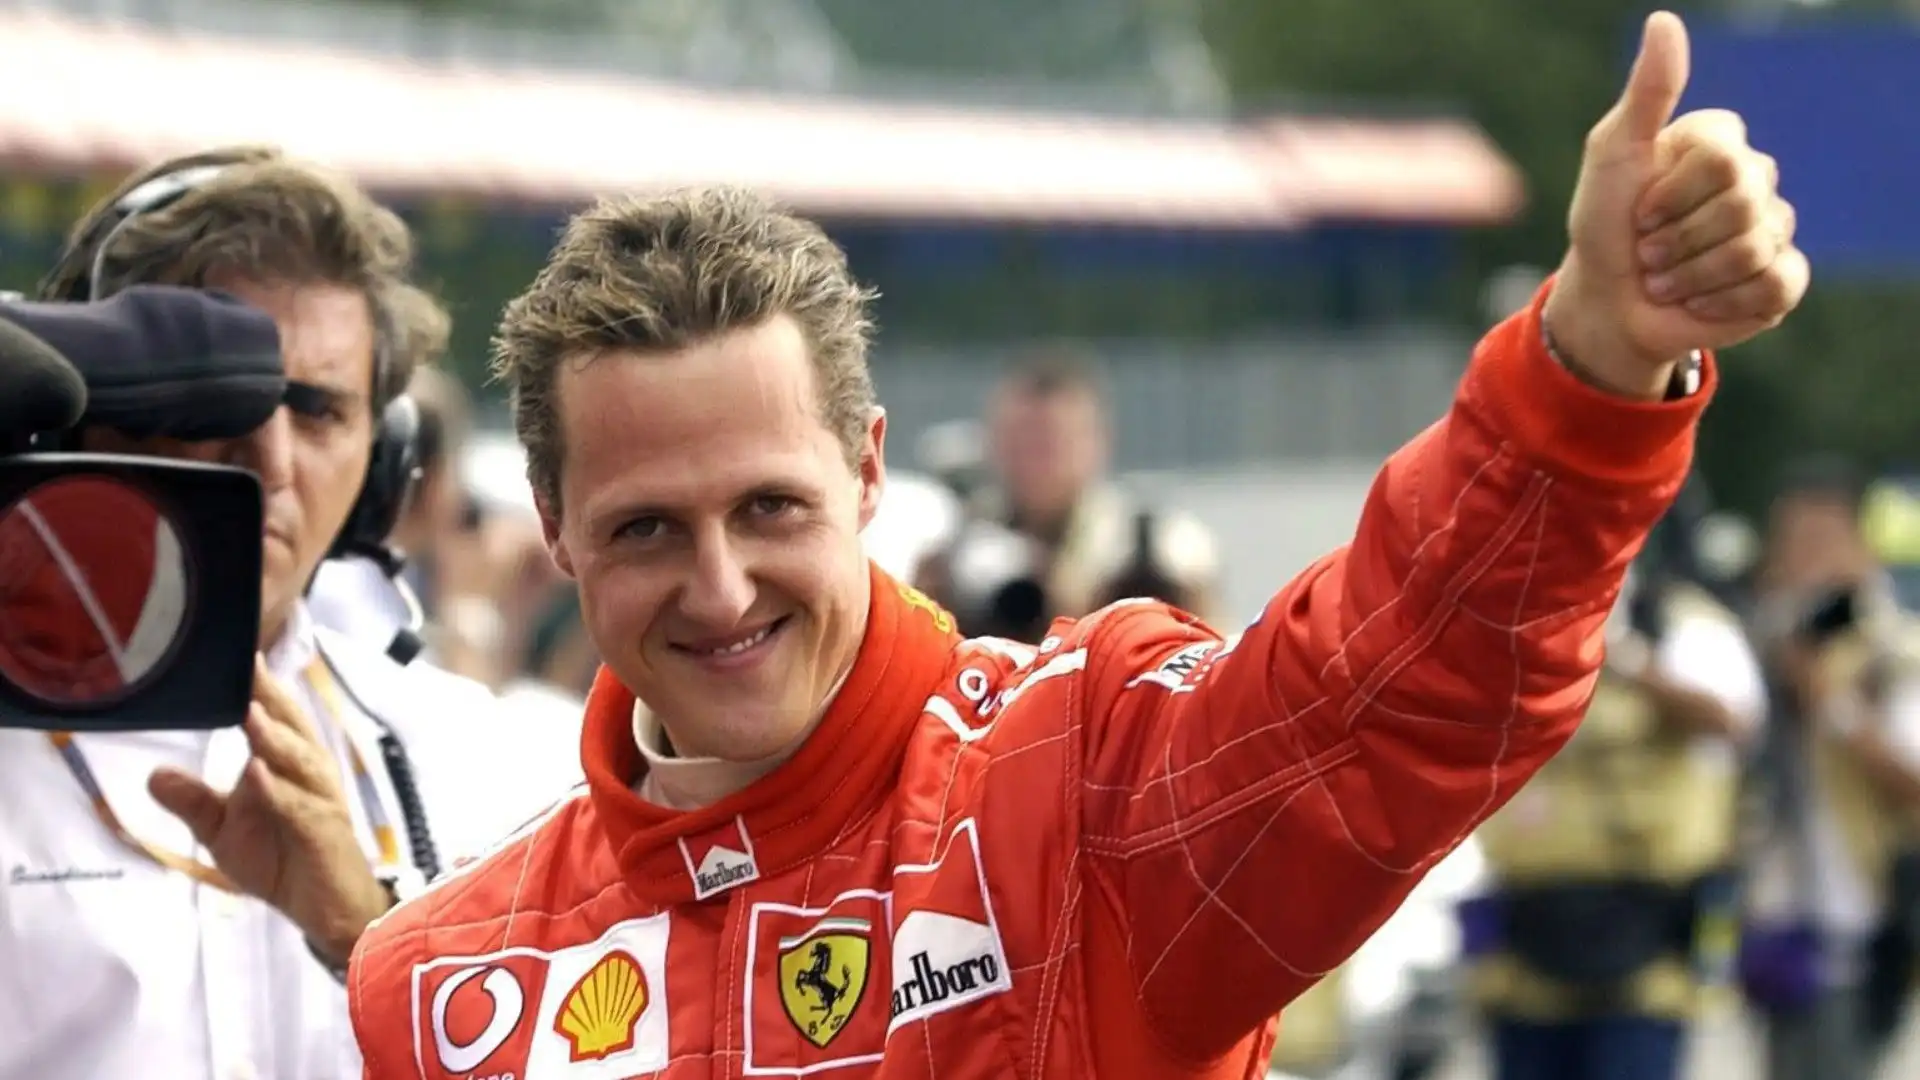 8- Michael Schumacher 1566